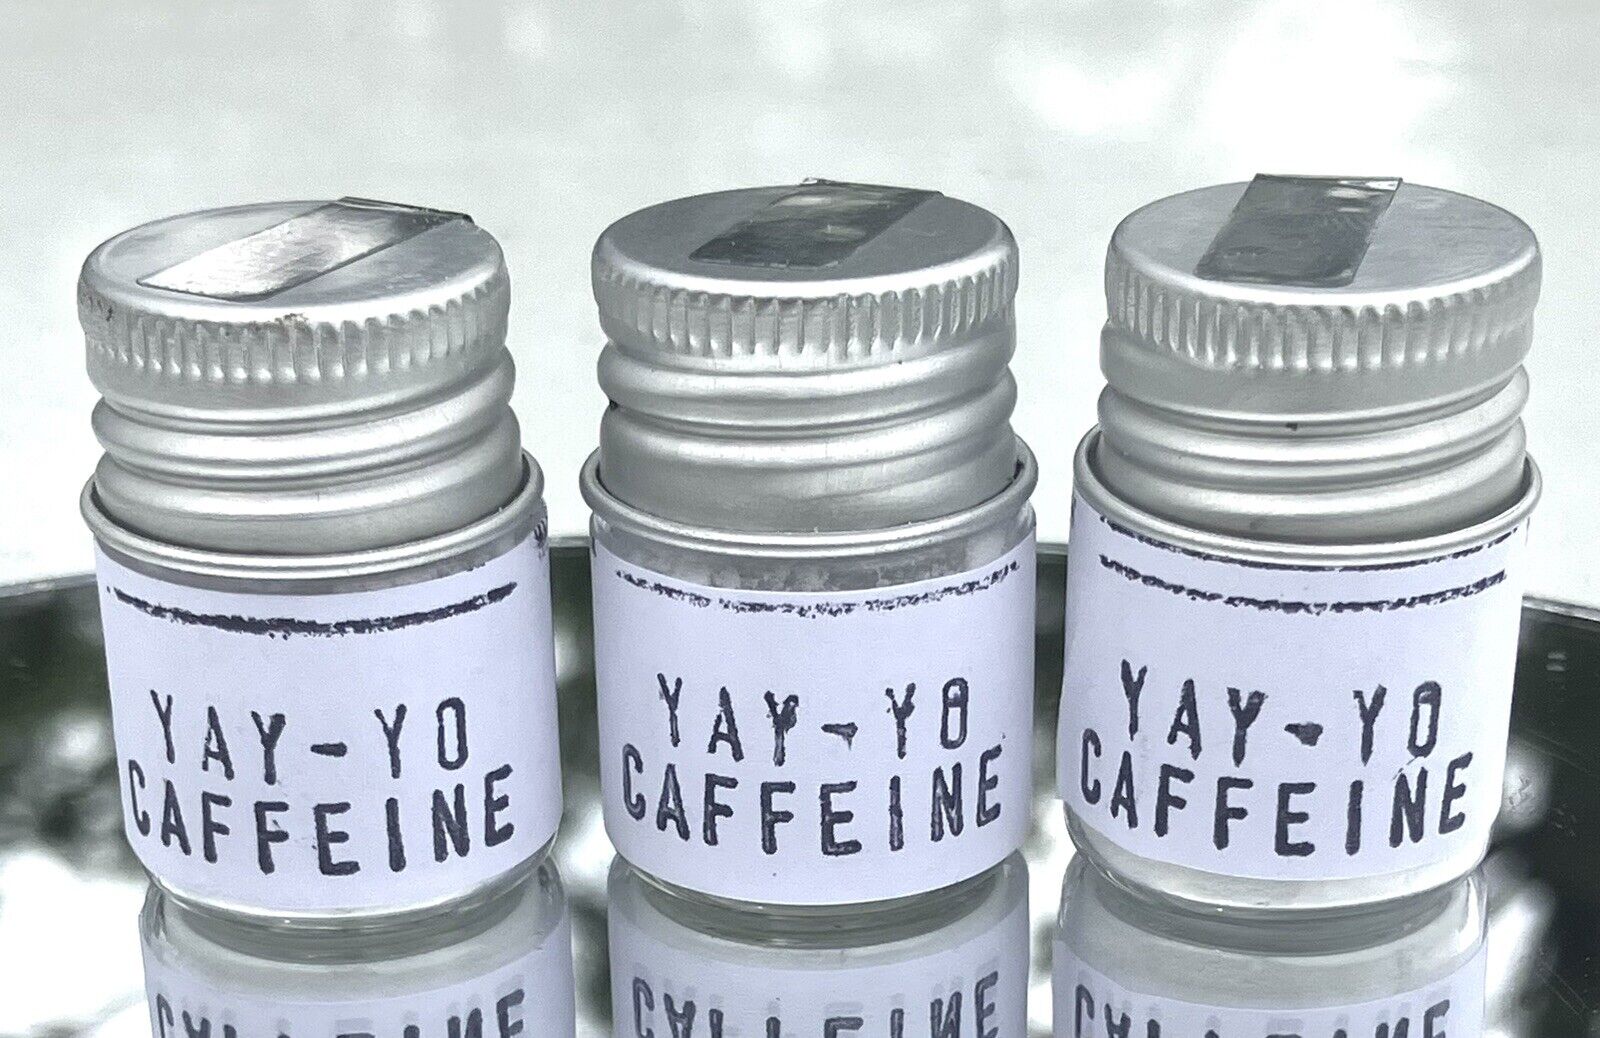 YAY-YO CAFFEINE compare to want a bump 1.5grams (3 vials)